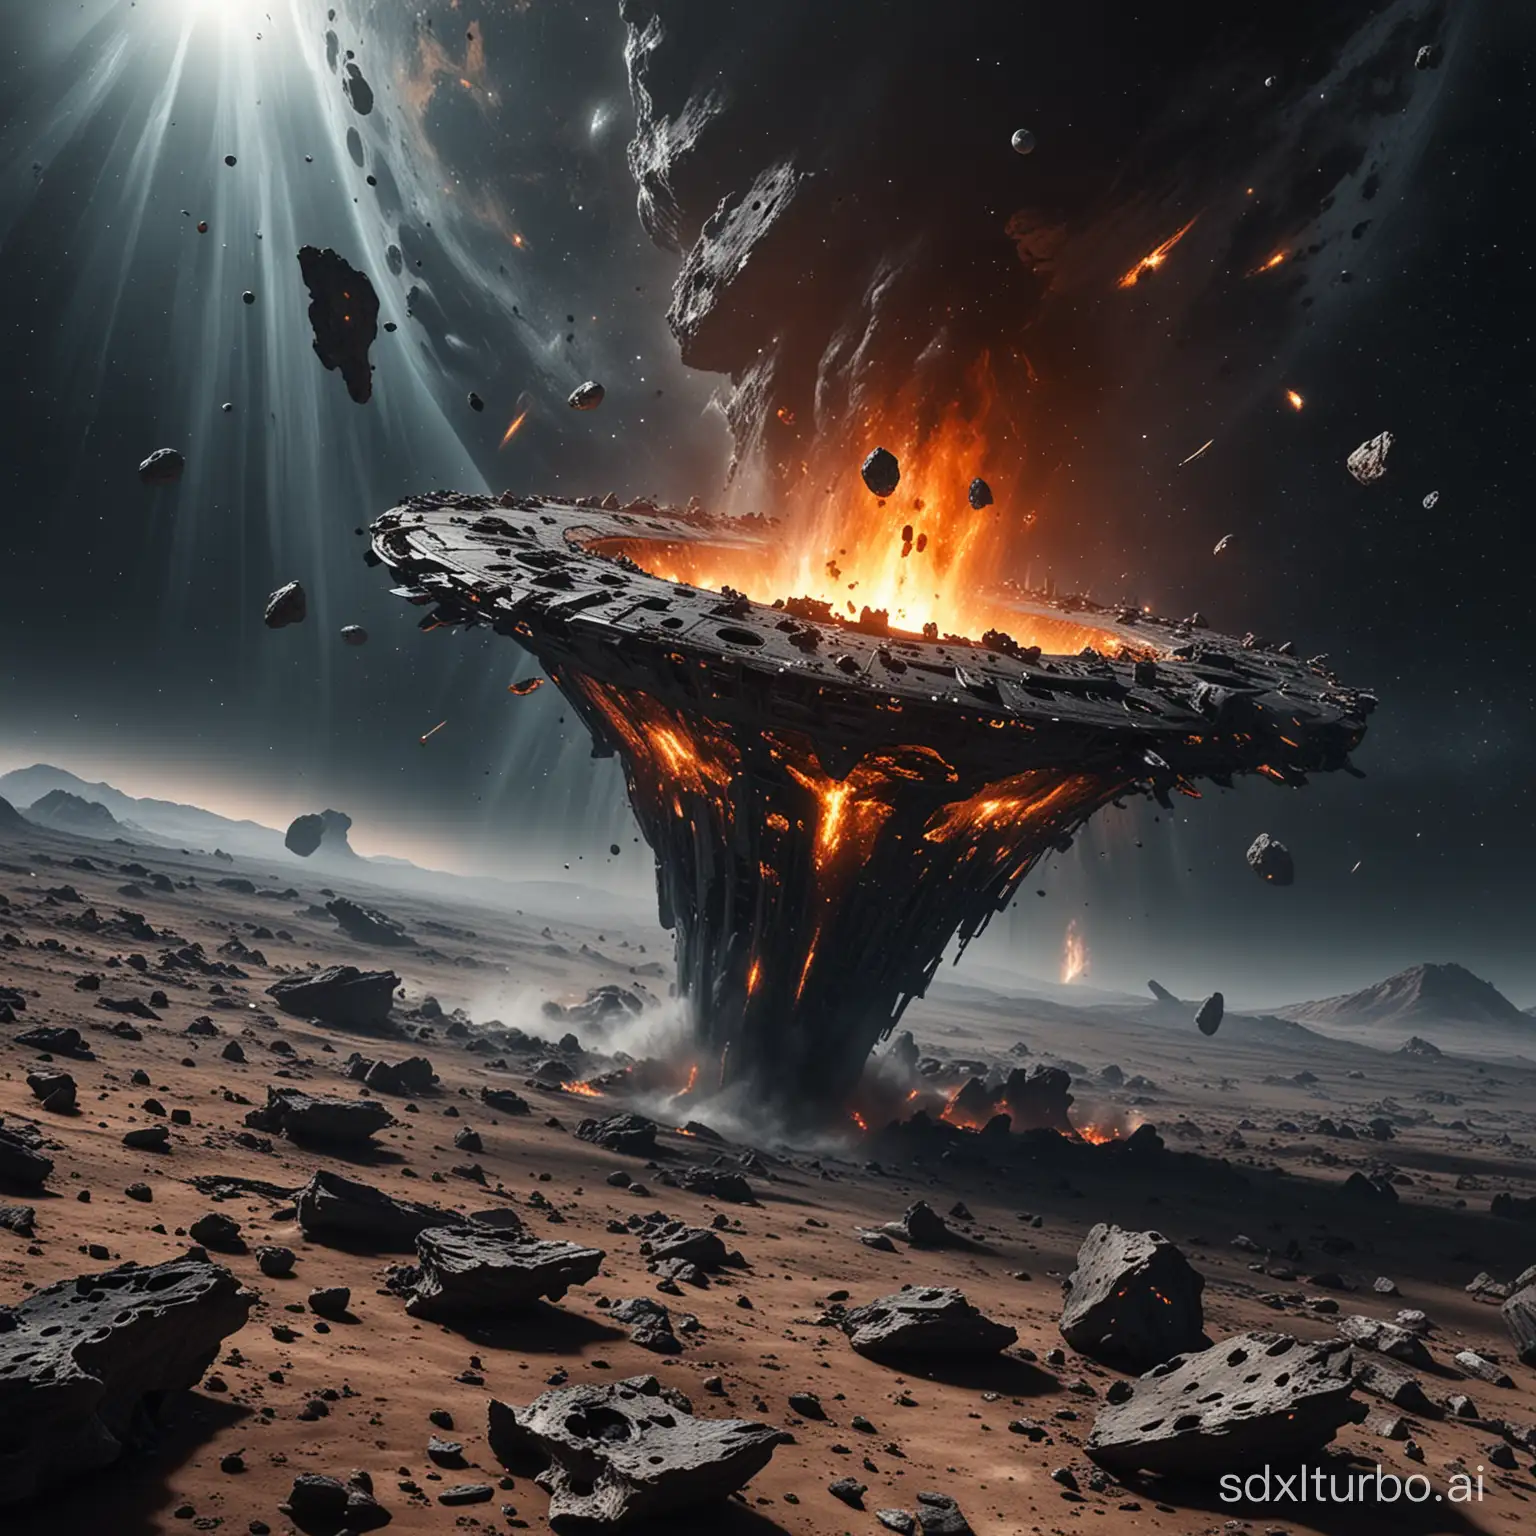 ancient alien starship debris multiple wreck parts massive destruction accident impact in black hole orbit melting